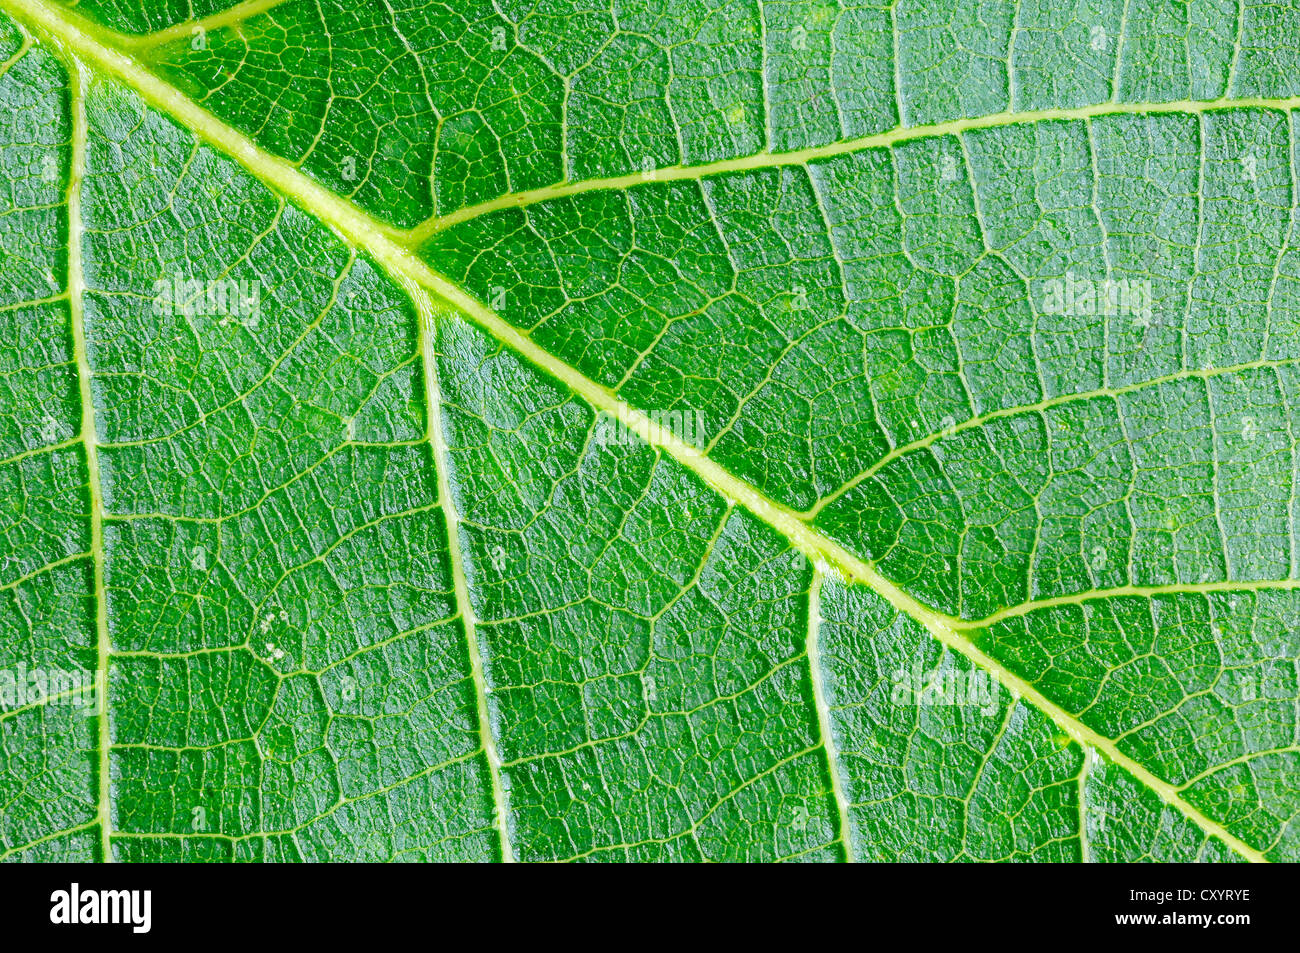 Persian walnut, English walnut (Juglans regia), detailed view of a leaf Stock Photo